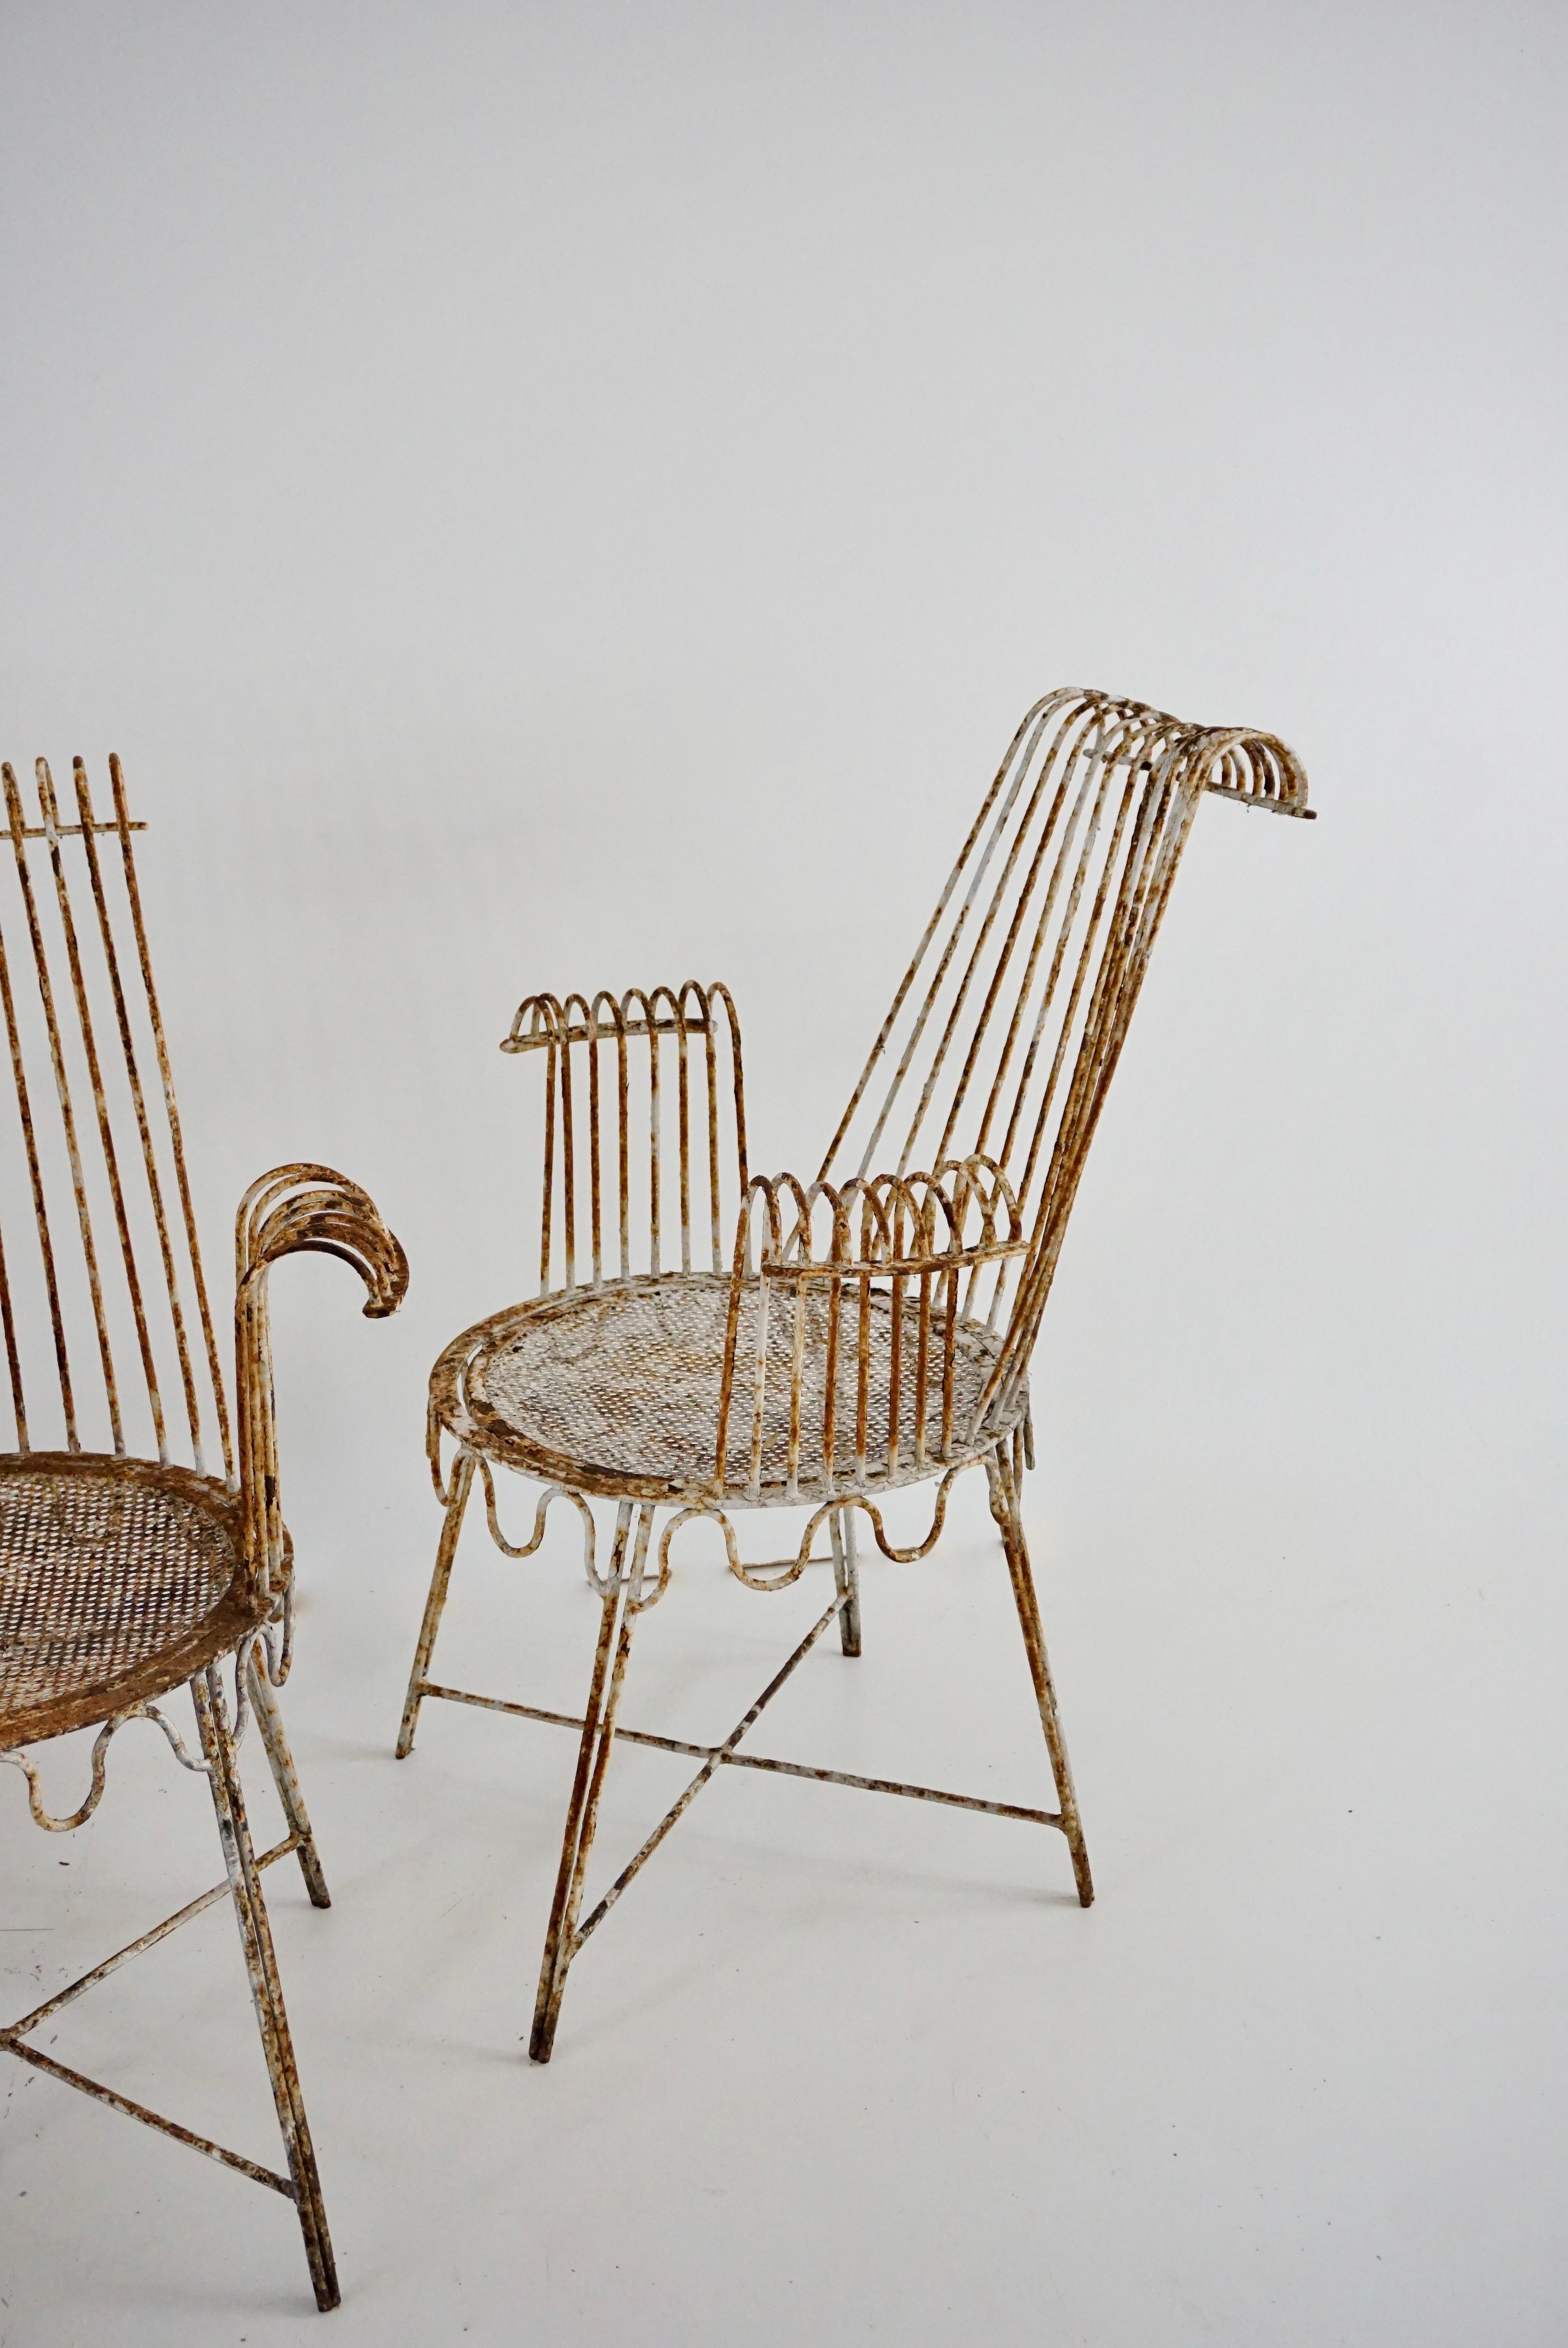 rare set of four garden armchairs designed by Mathieu Matègot and named 